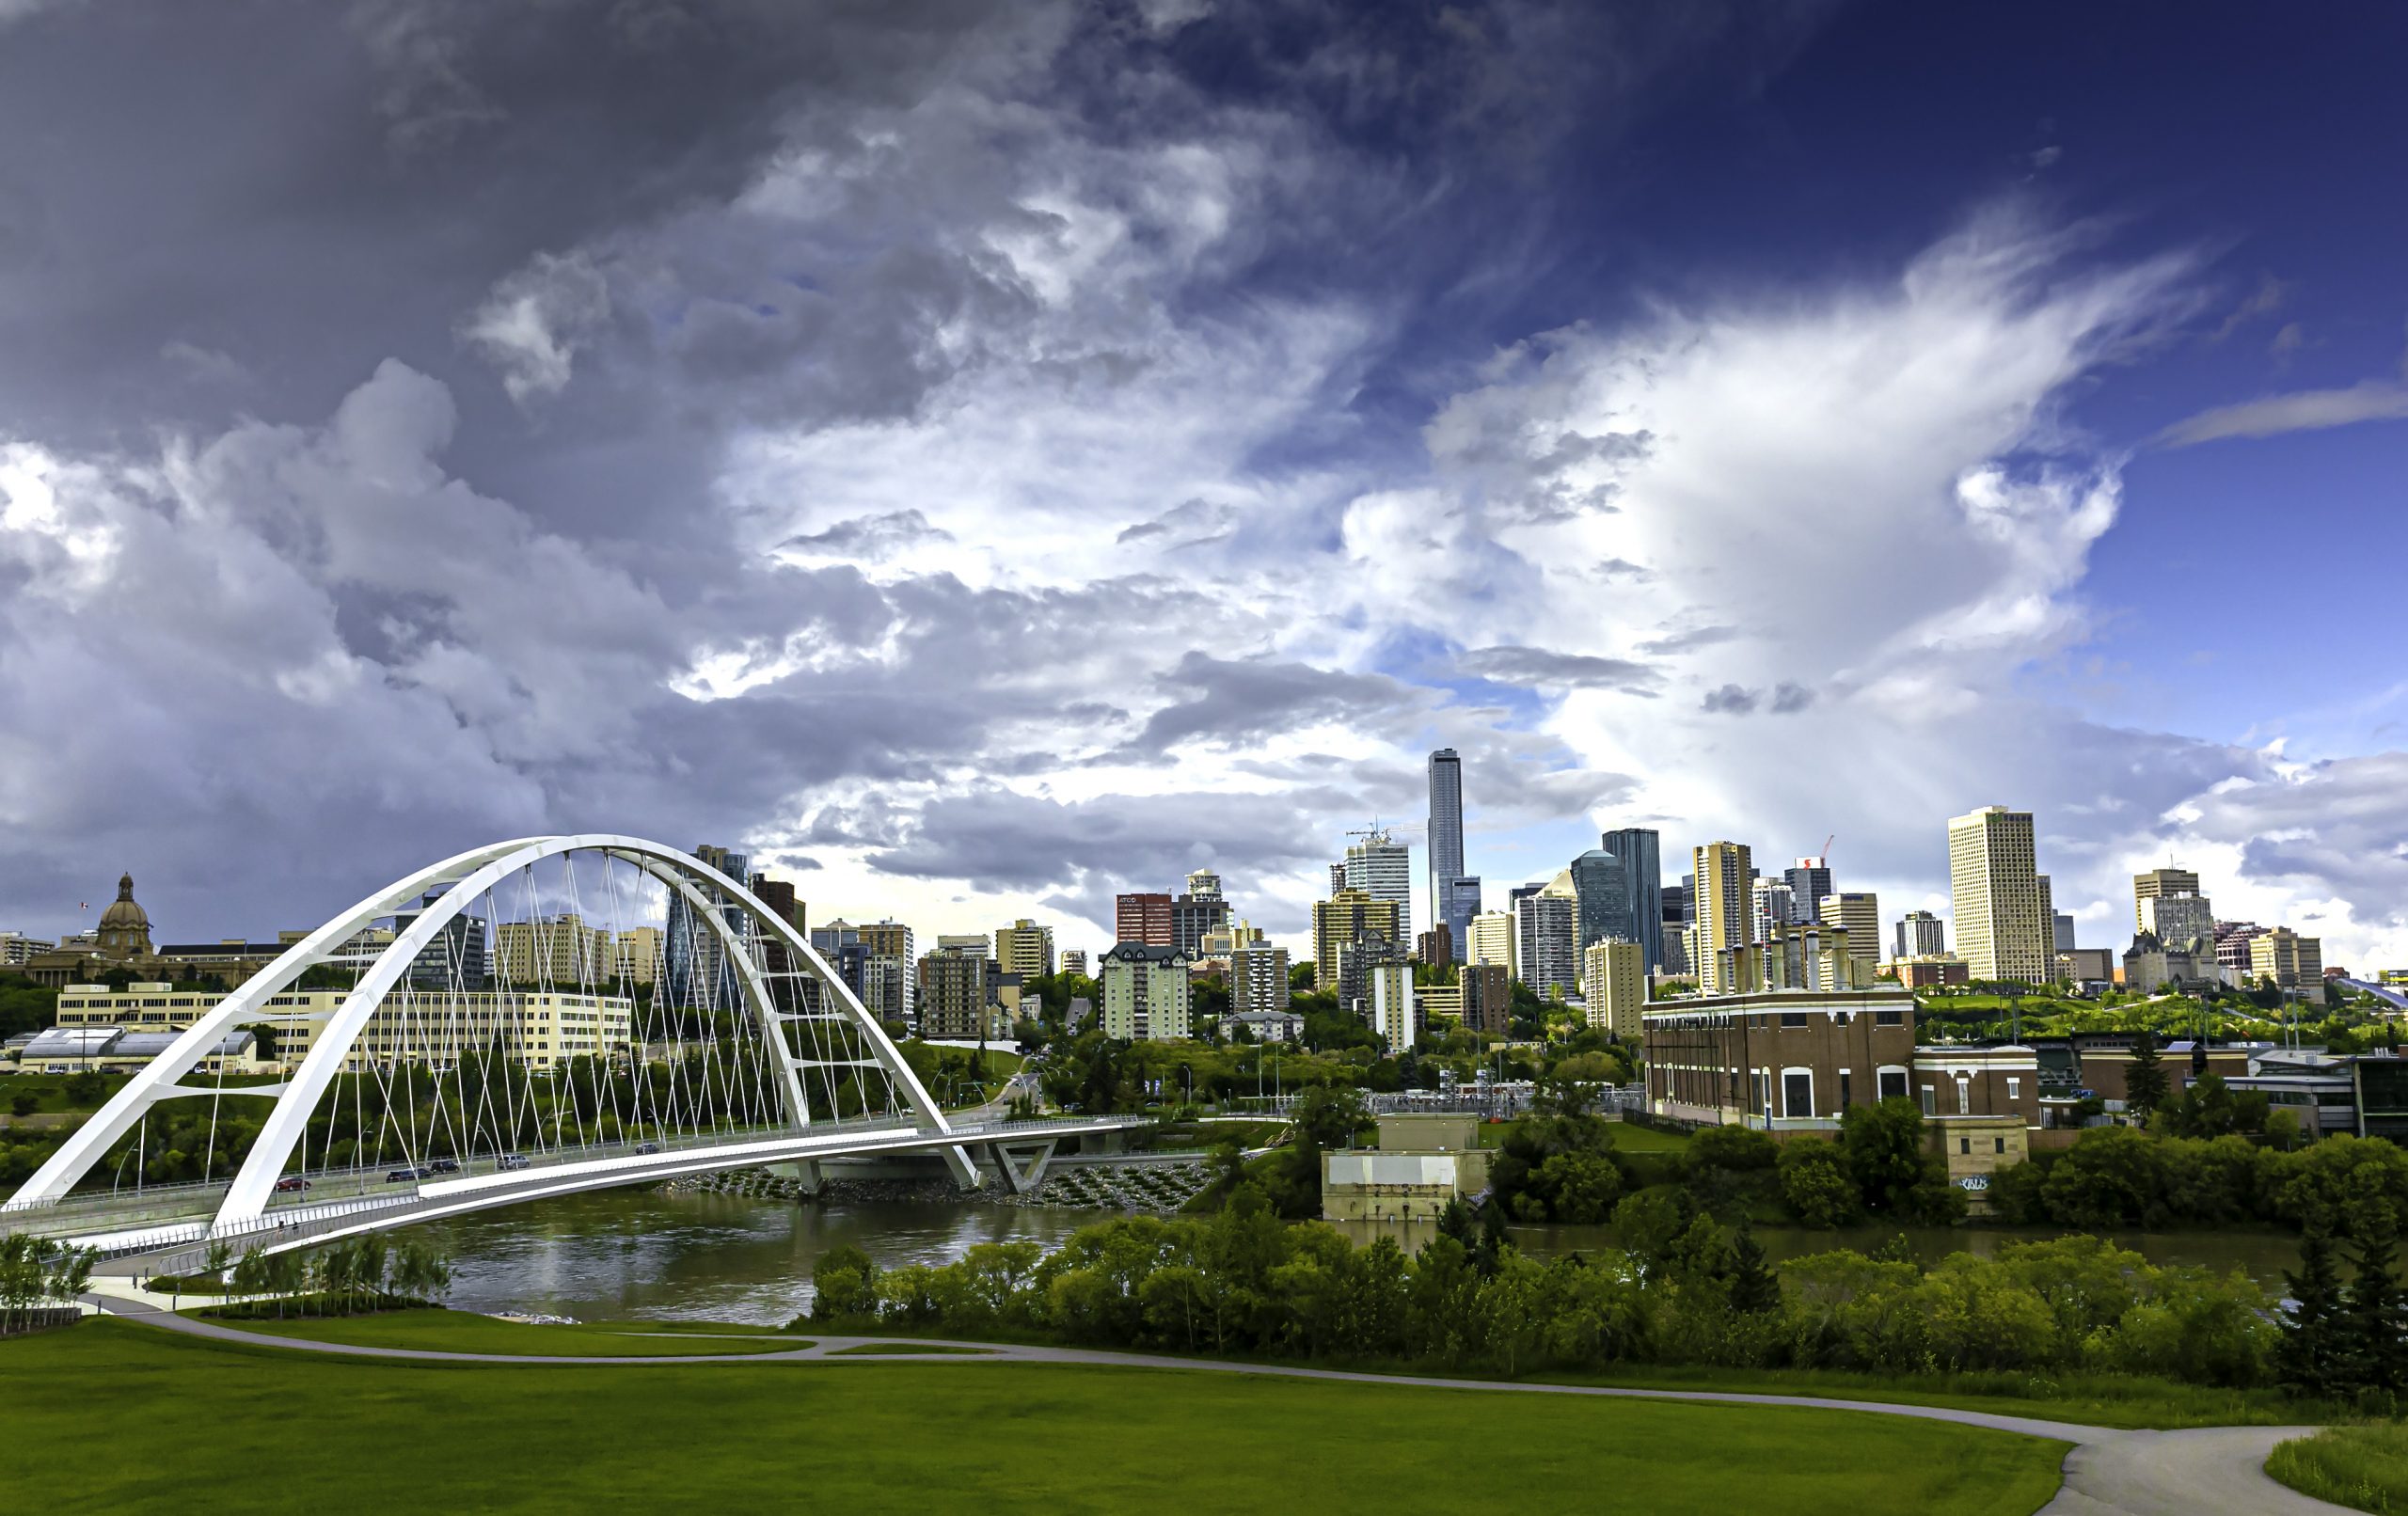 Skyline image of the downtown core in Edmonton, Alberta